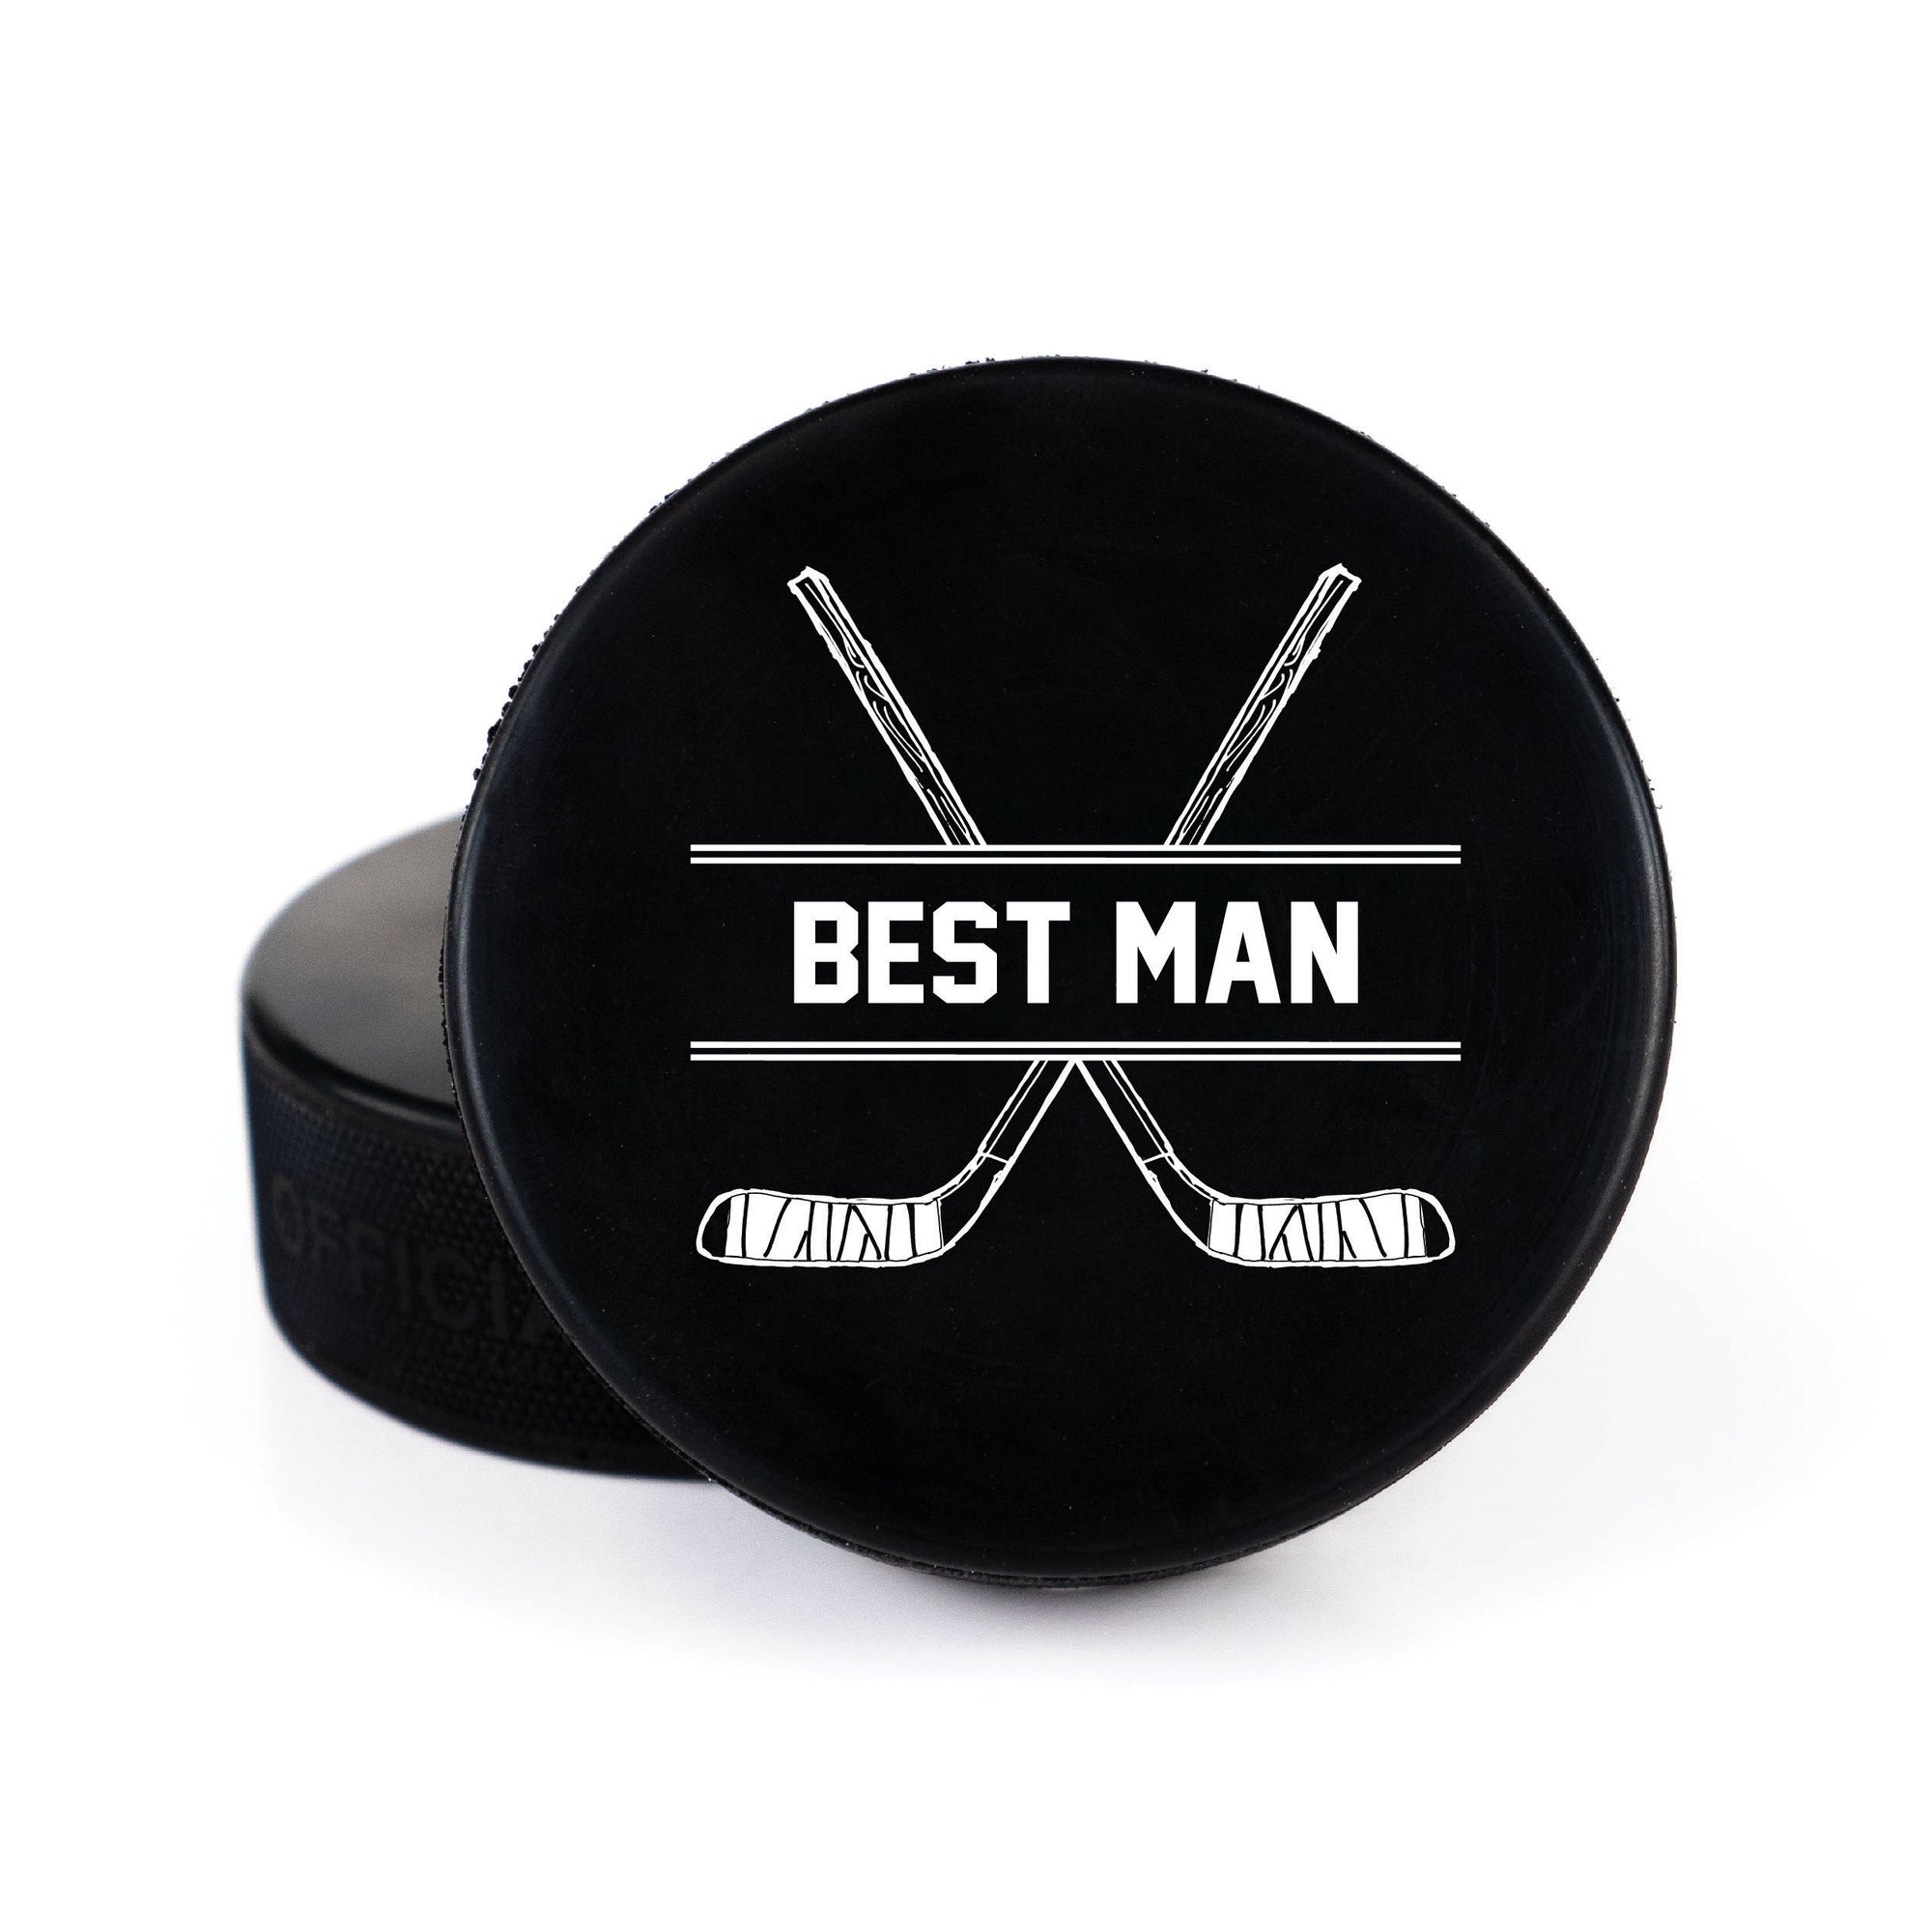 Hockey Puck, Custom Photo Printed Personalized hockey pucks